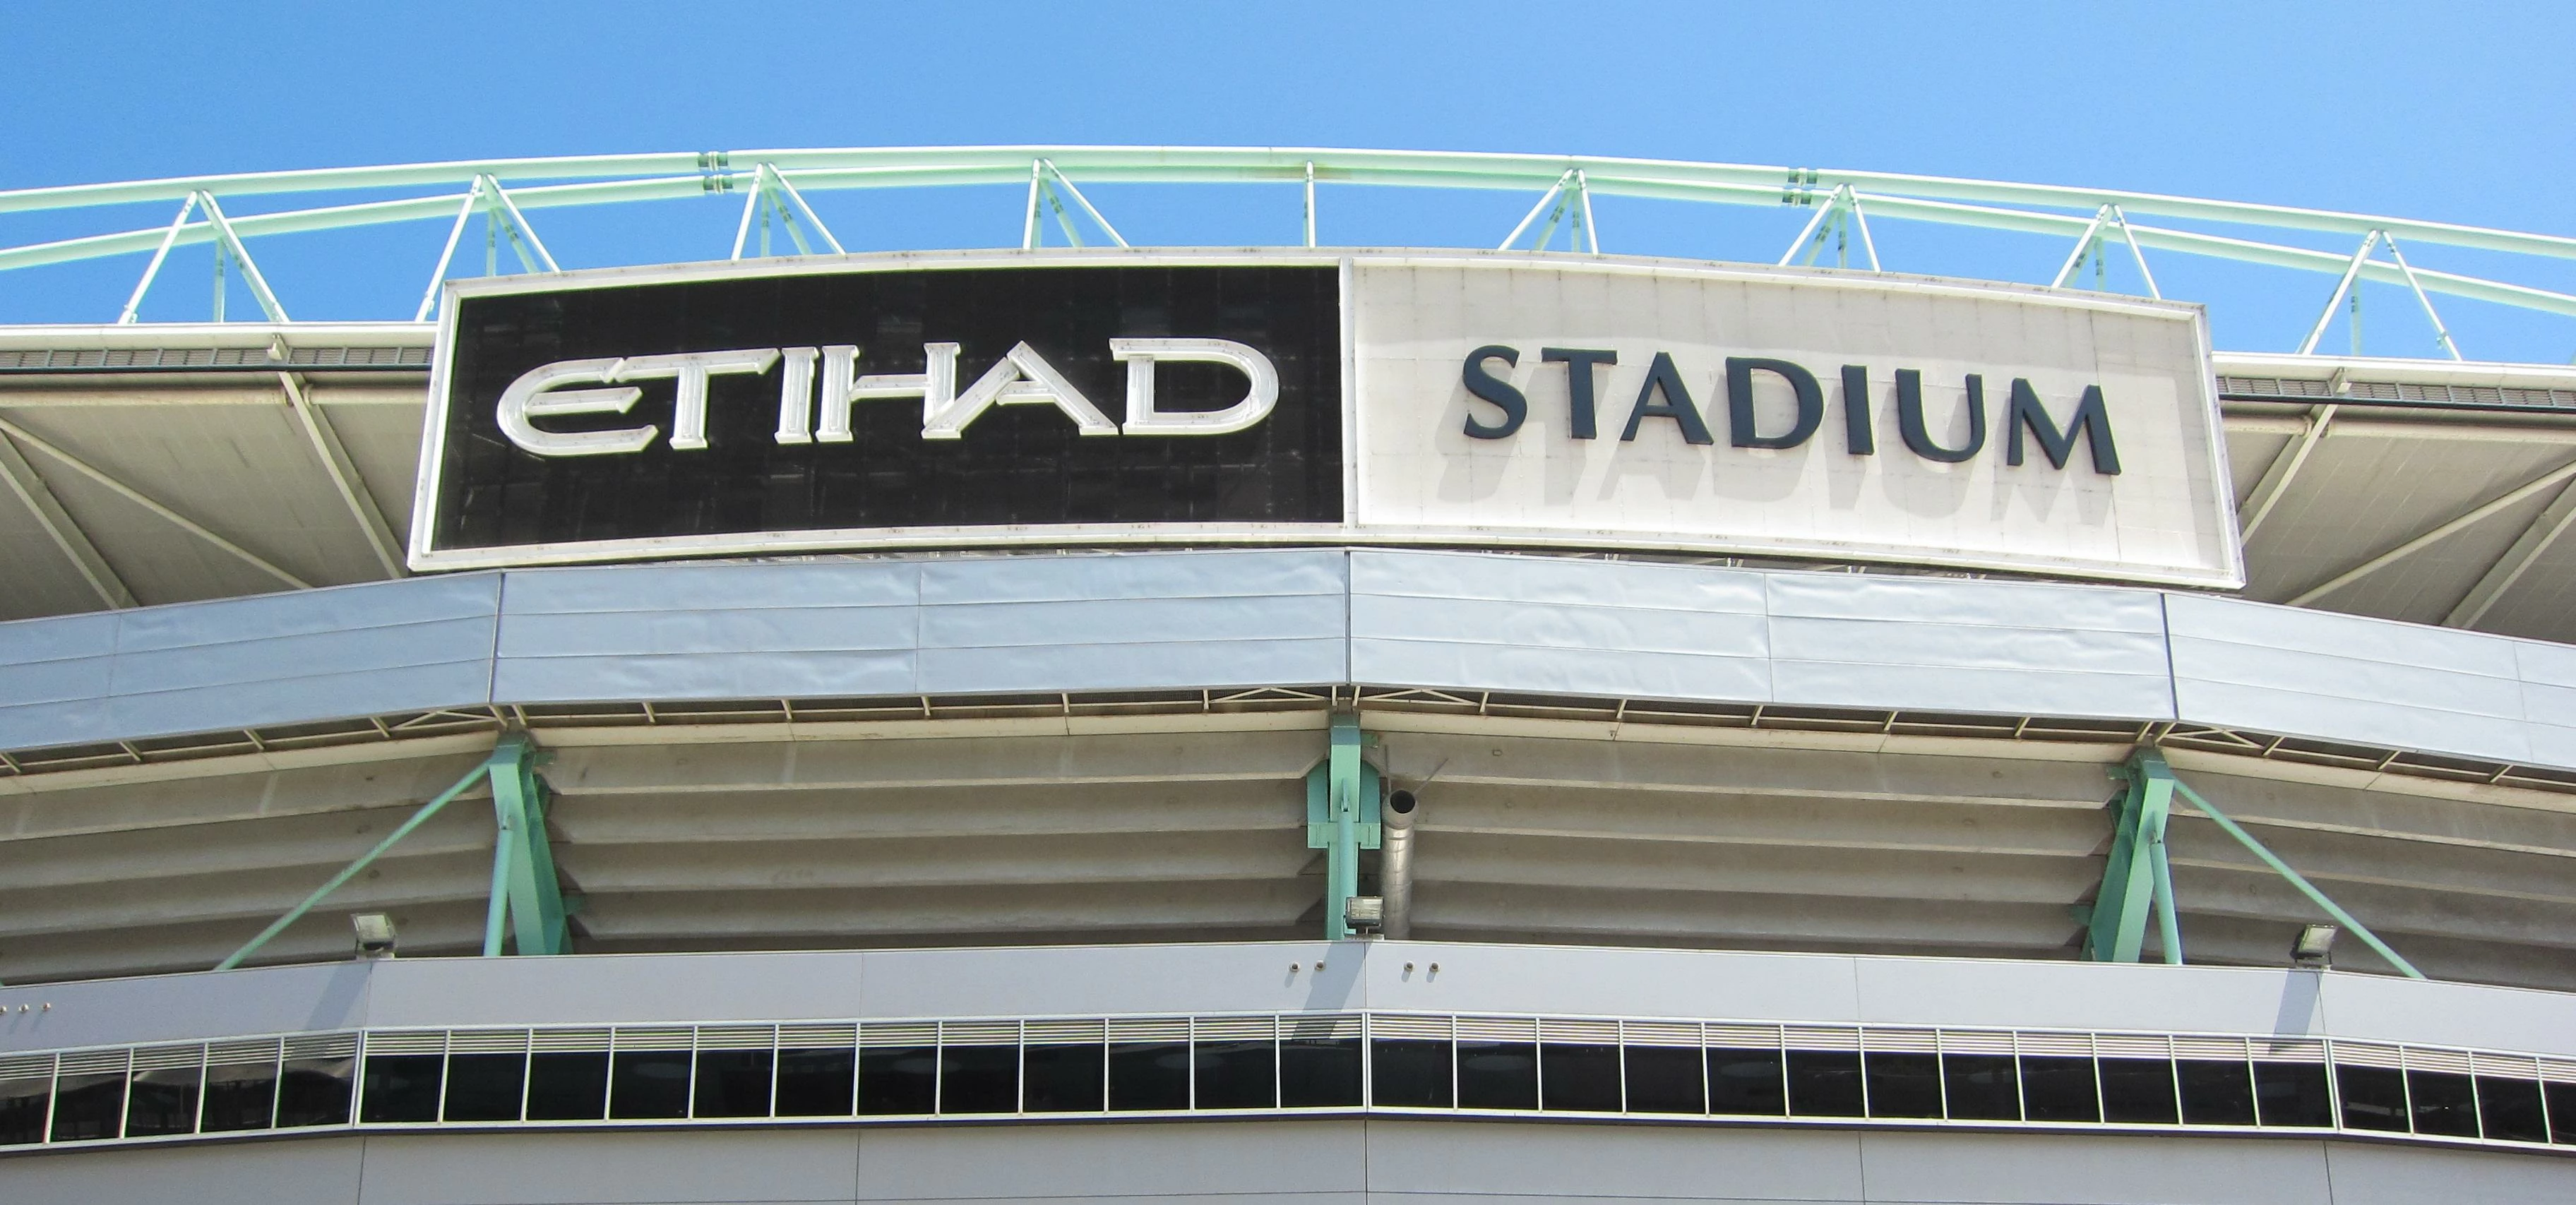 Docklands Stadium, Melbourne